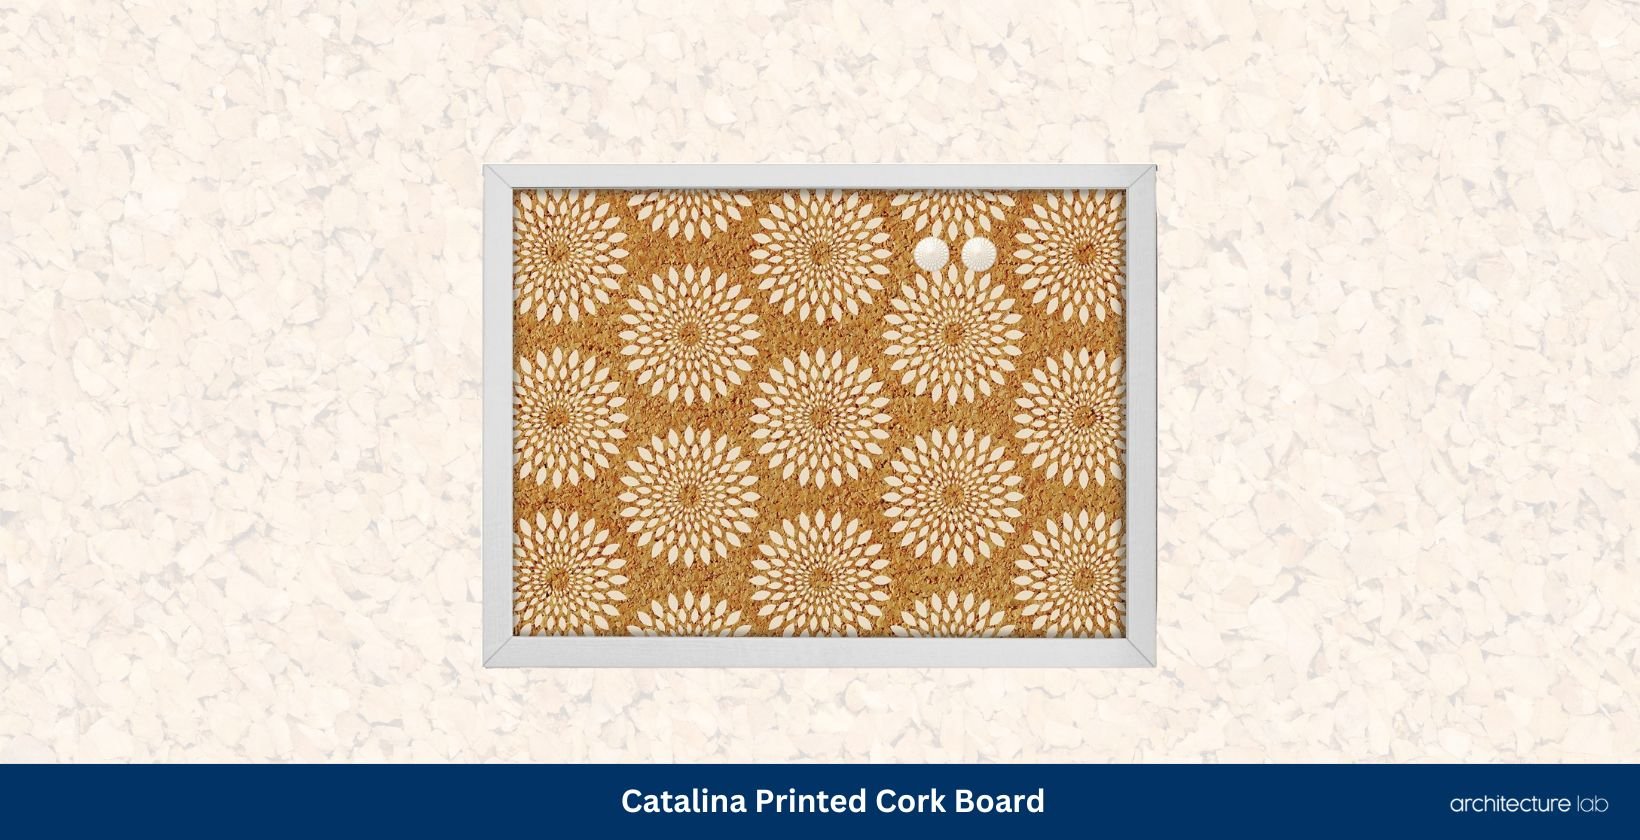 Catalina printed cork board